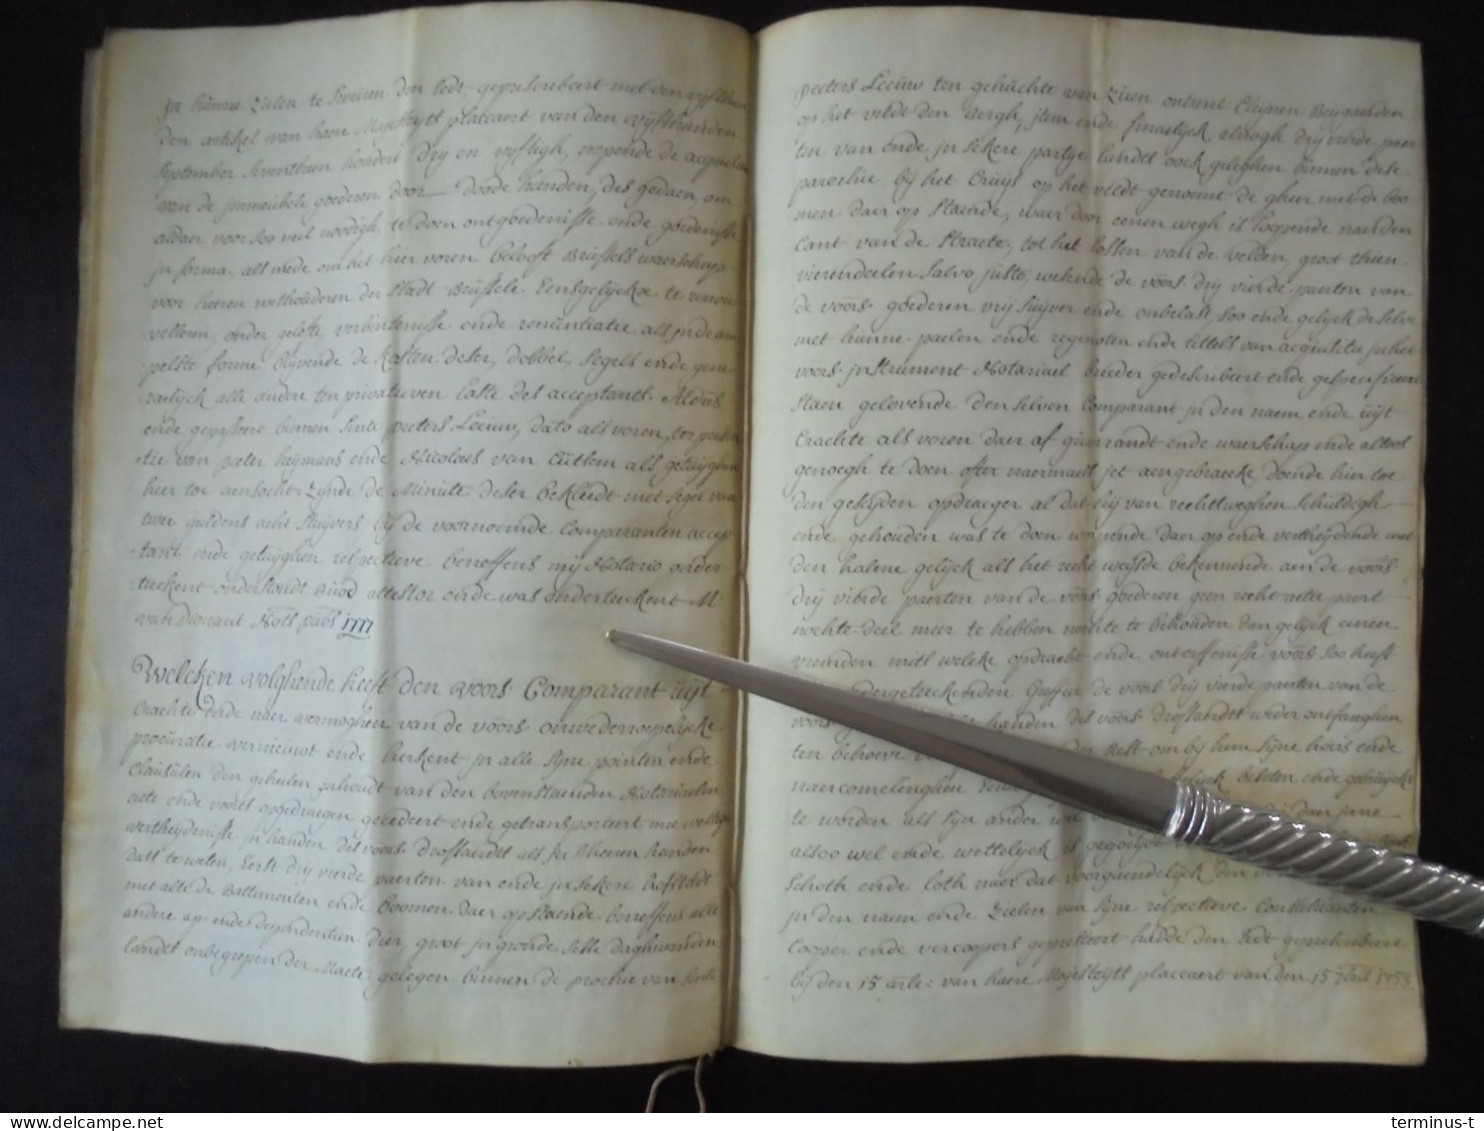 SINT-PIETERS-LEEUW. "Vercrijghbrief" Anno 1780 Op PERKAMENT - Manuskripte